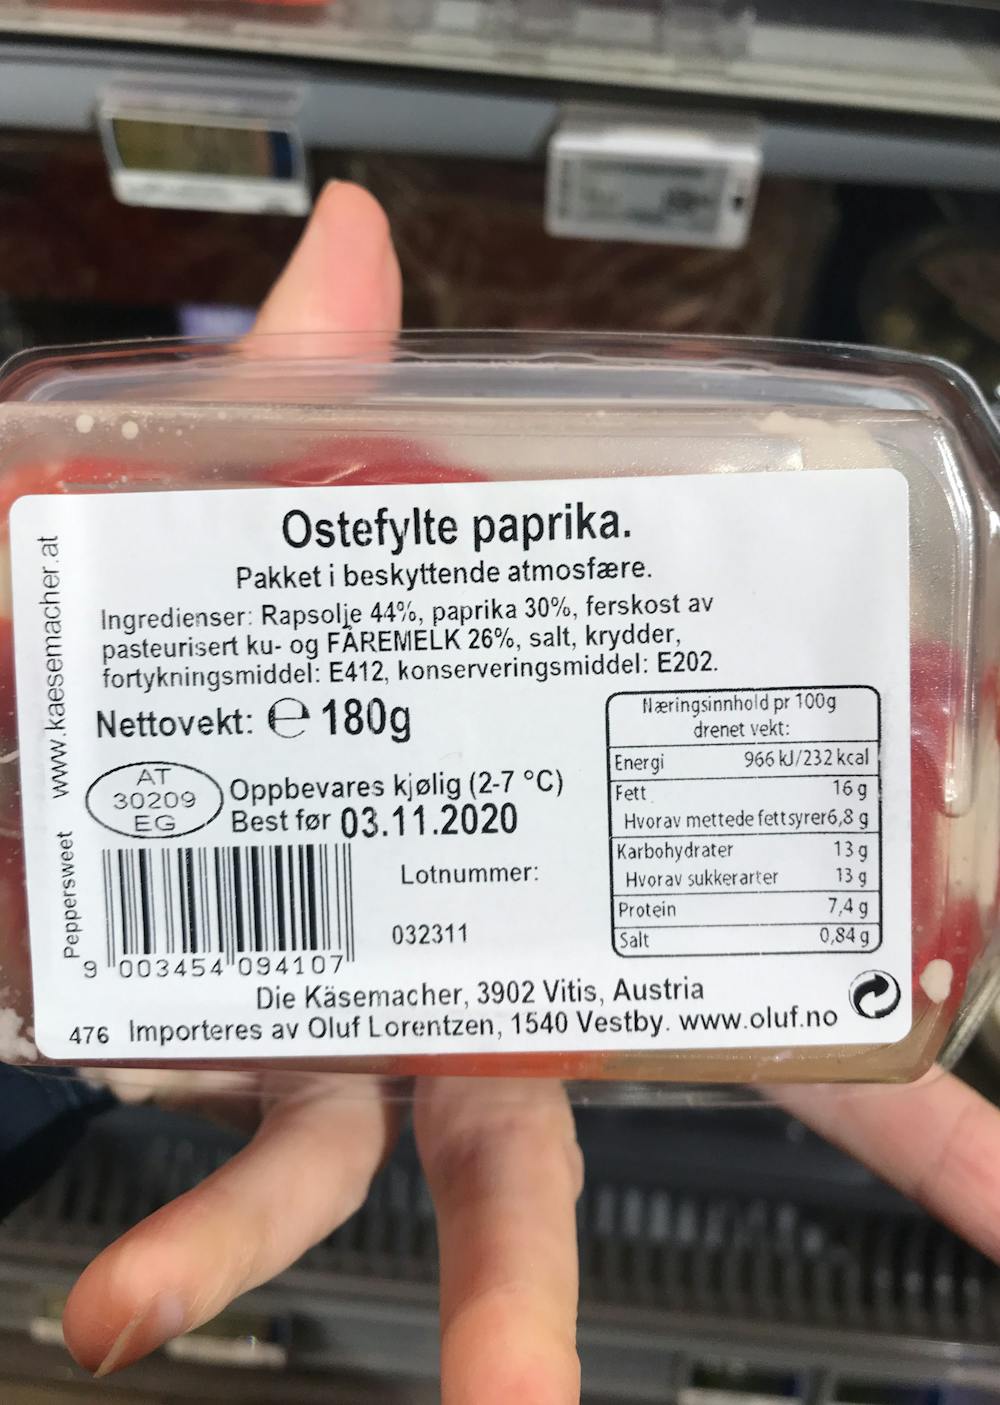 Ingredienslisten til Ostefylte paprika, Die kasemacher